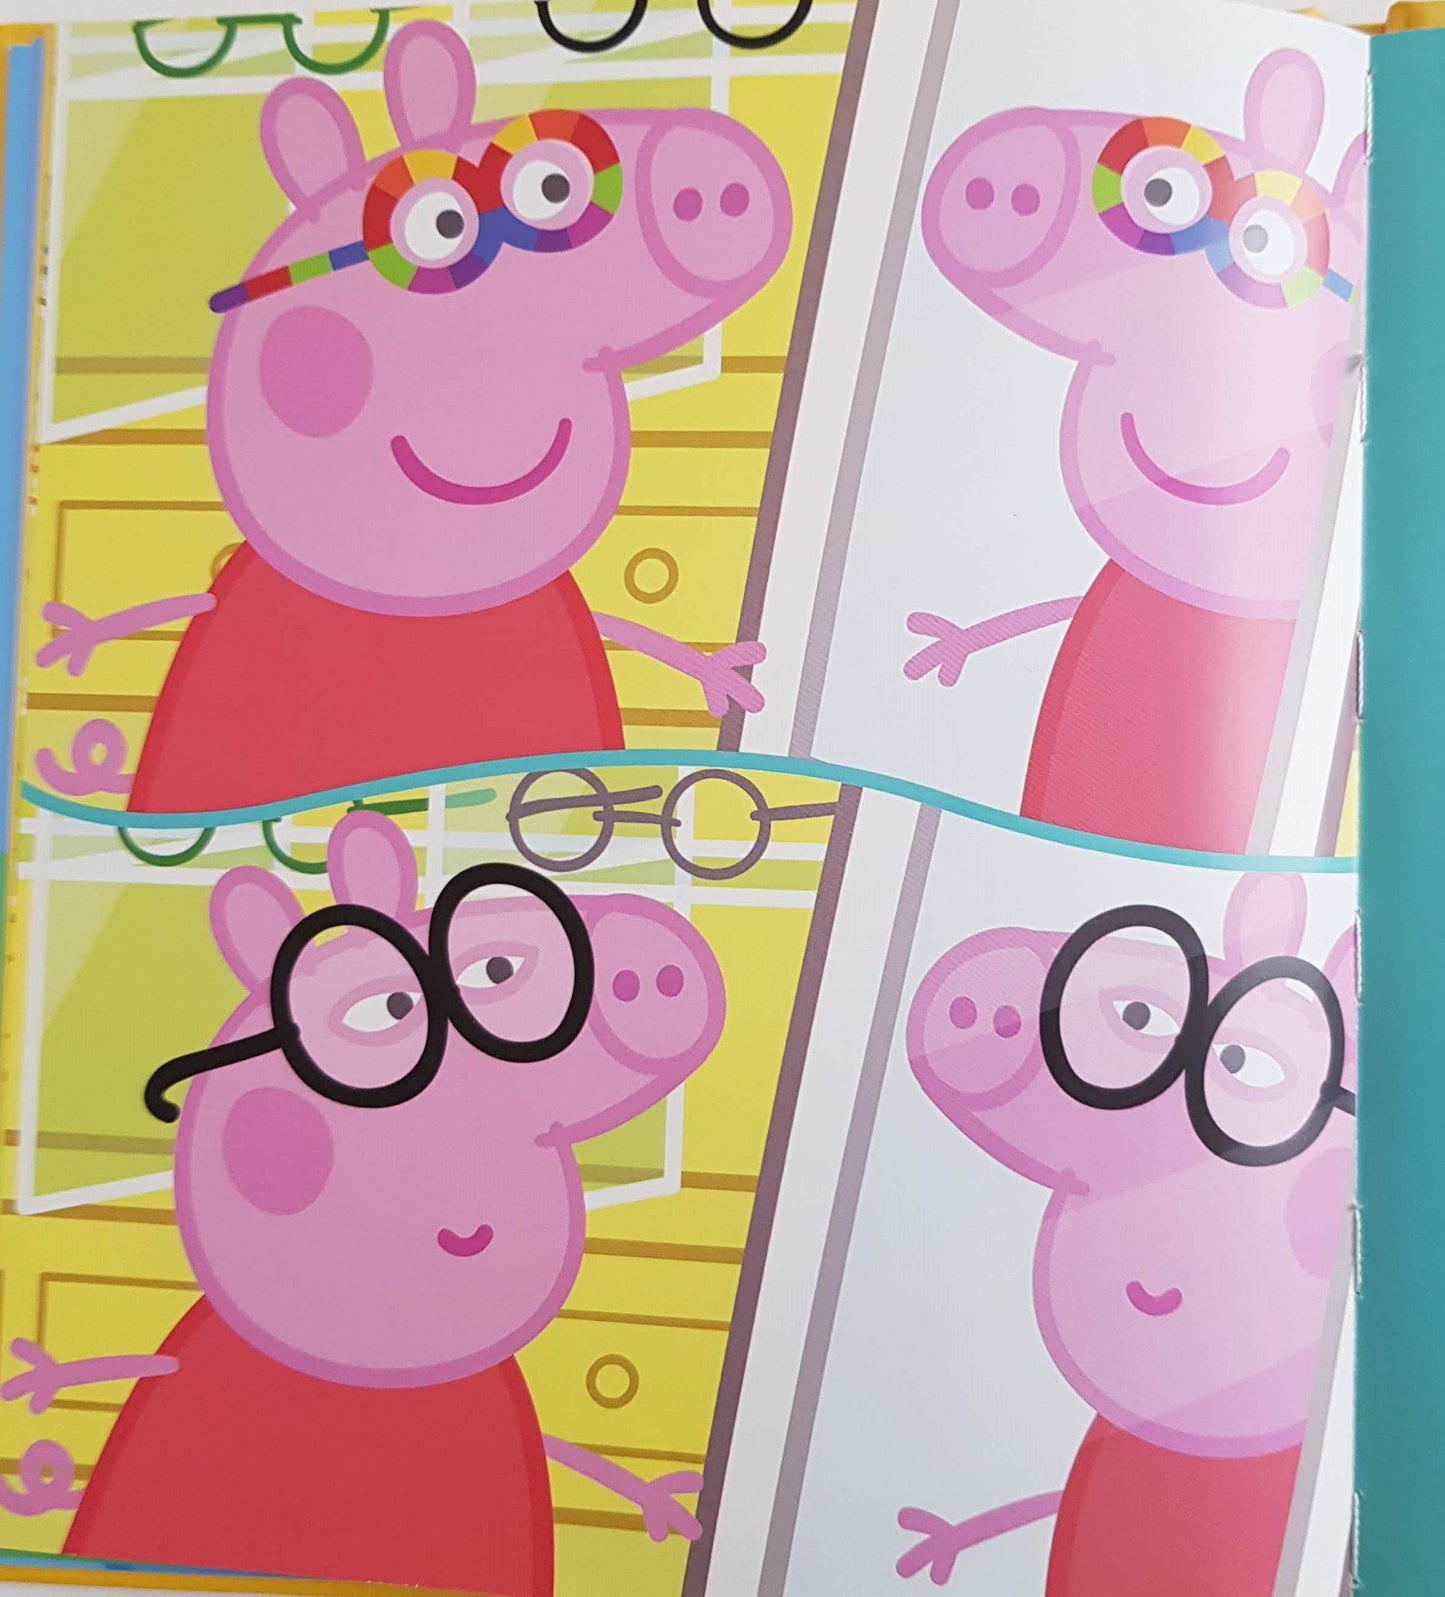 Peppa Veut des lunettes Like New Peppa Pig  (4589908590647)